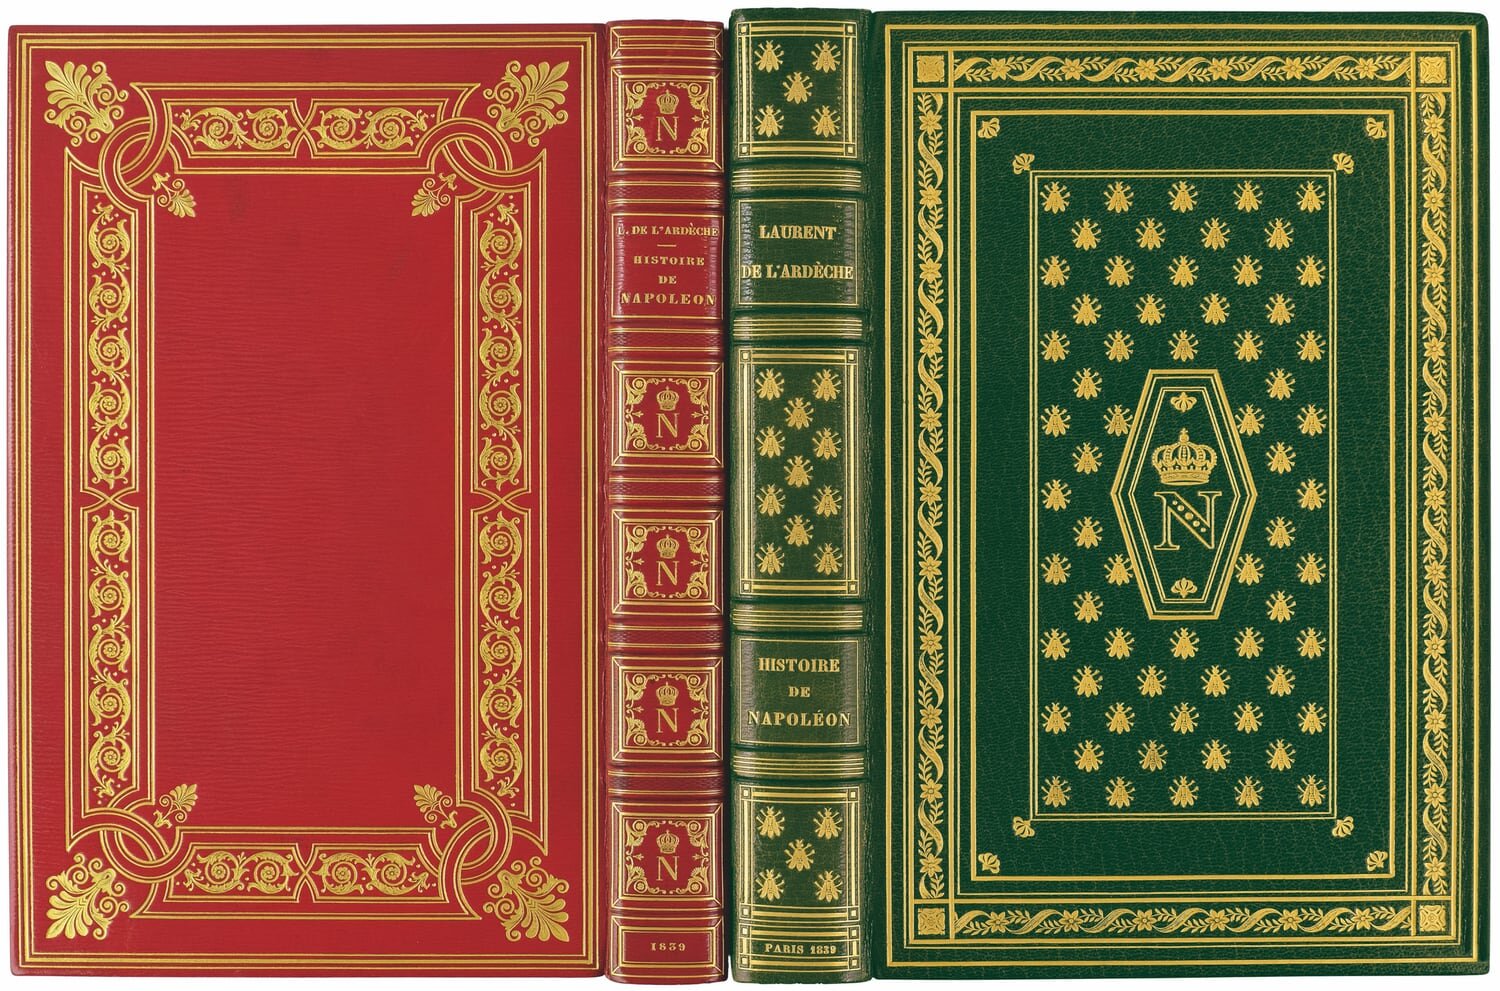  The  Histoire de l'empereur Napoléon  in two copies on China paper [nos. 387-388] 